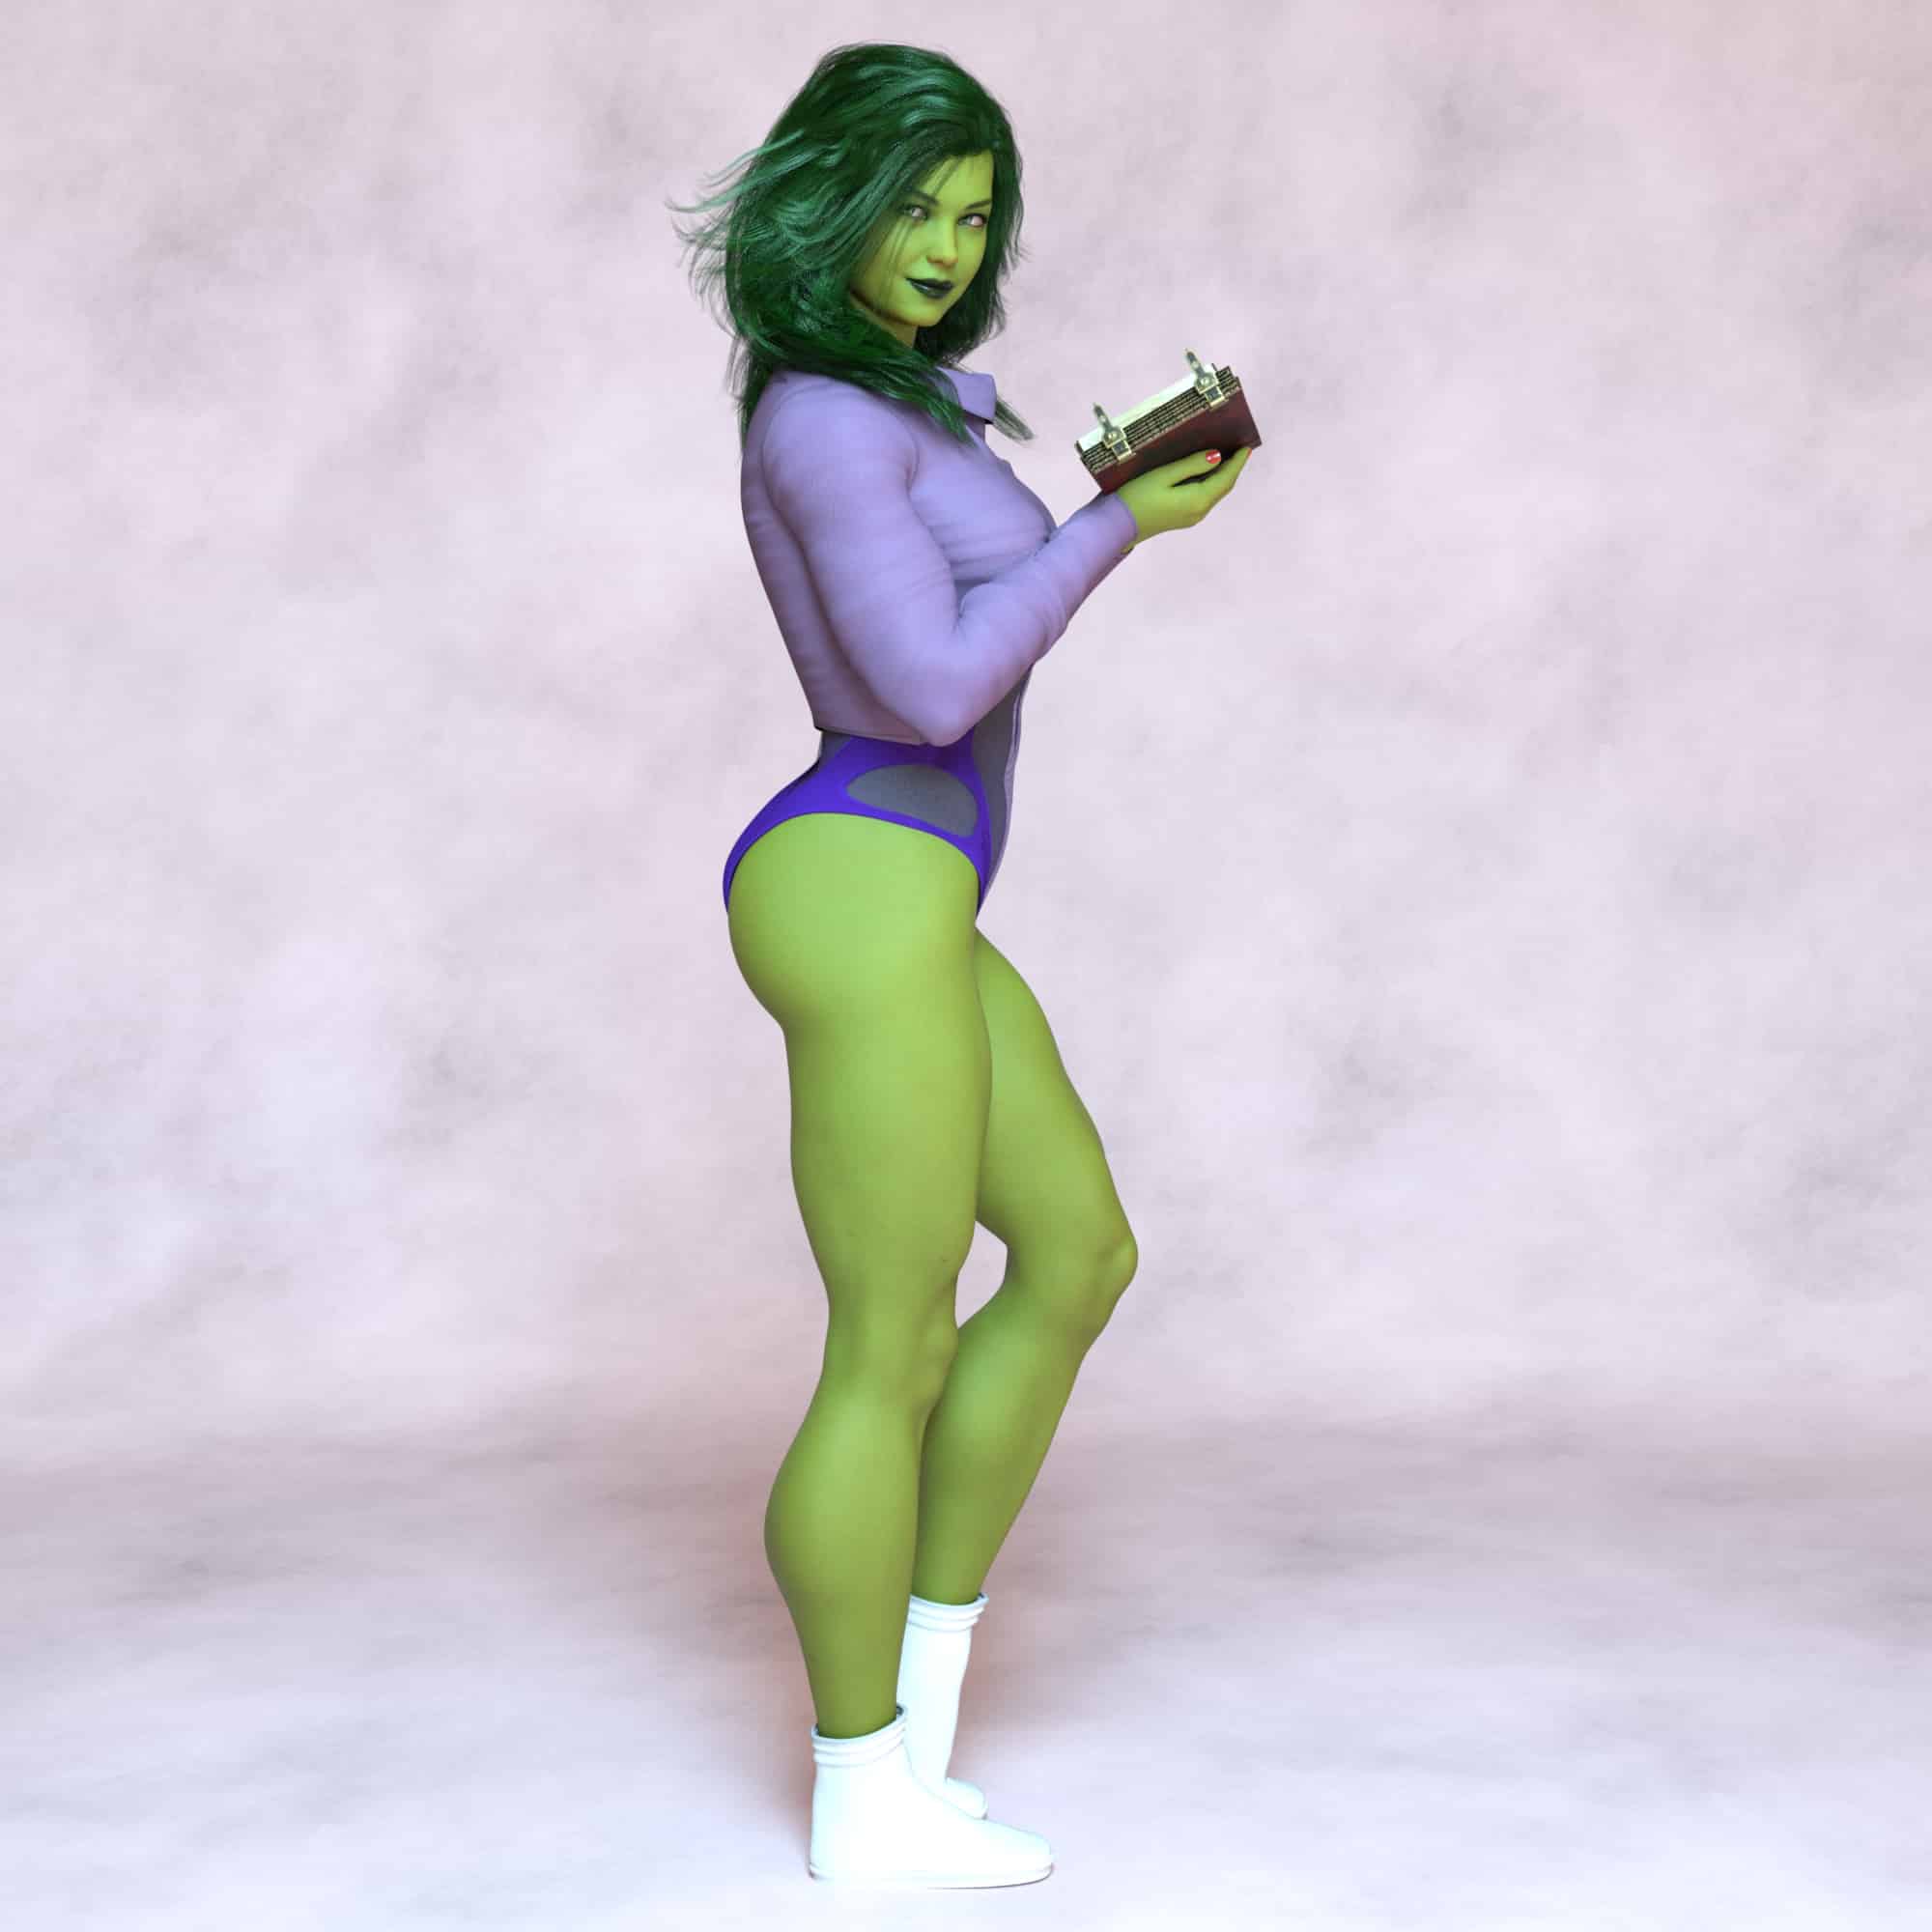 She Hulk 13 bookworm - 3D Artwork